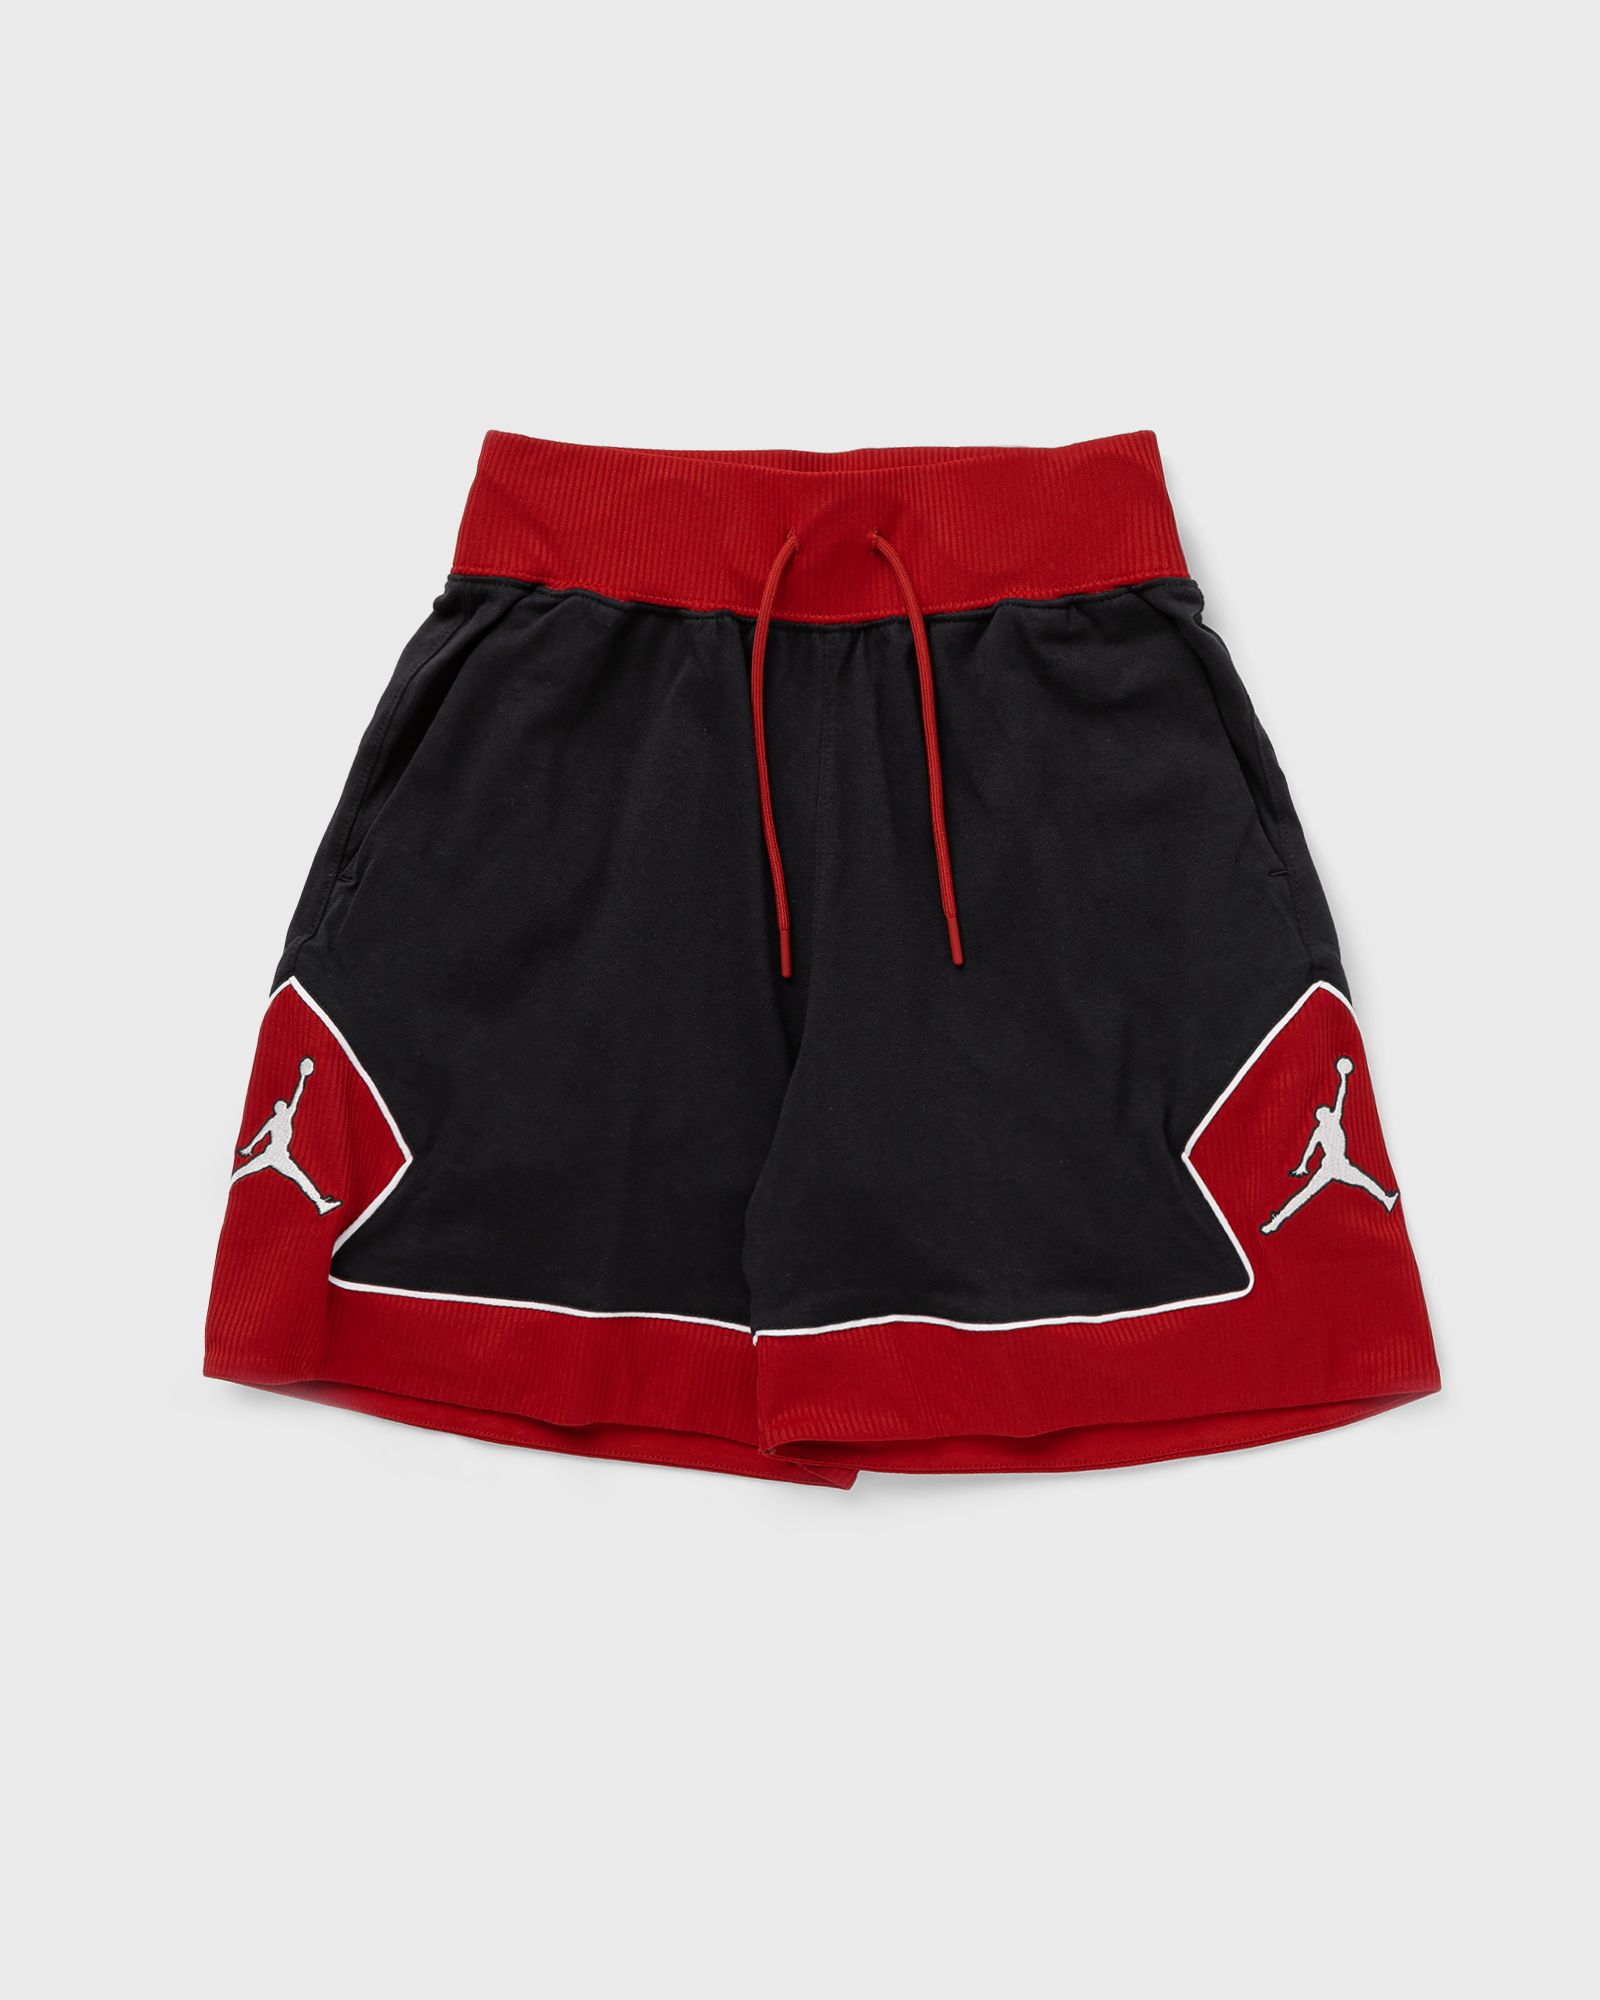 Nike - shorts women sport & team shorts black in größe:l